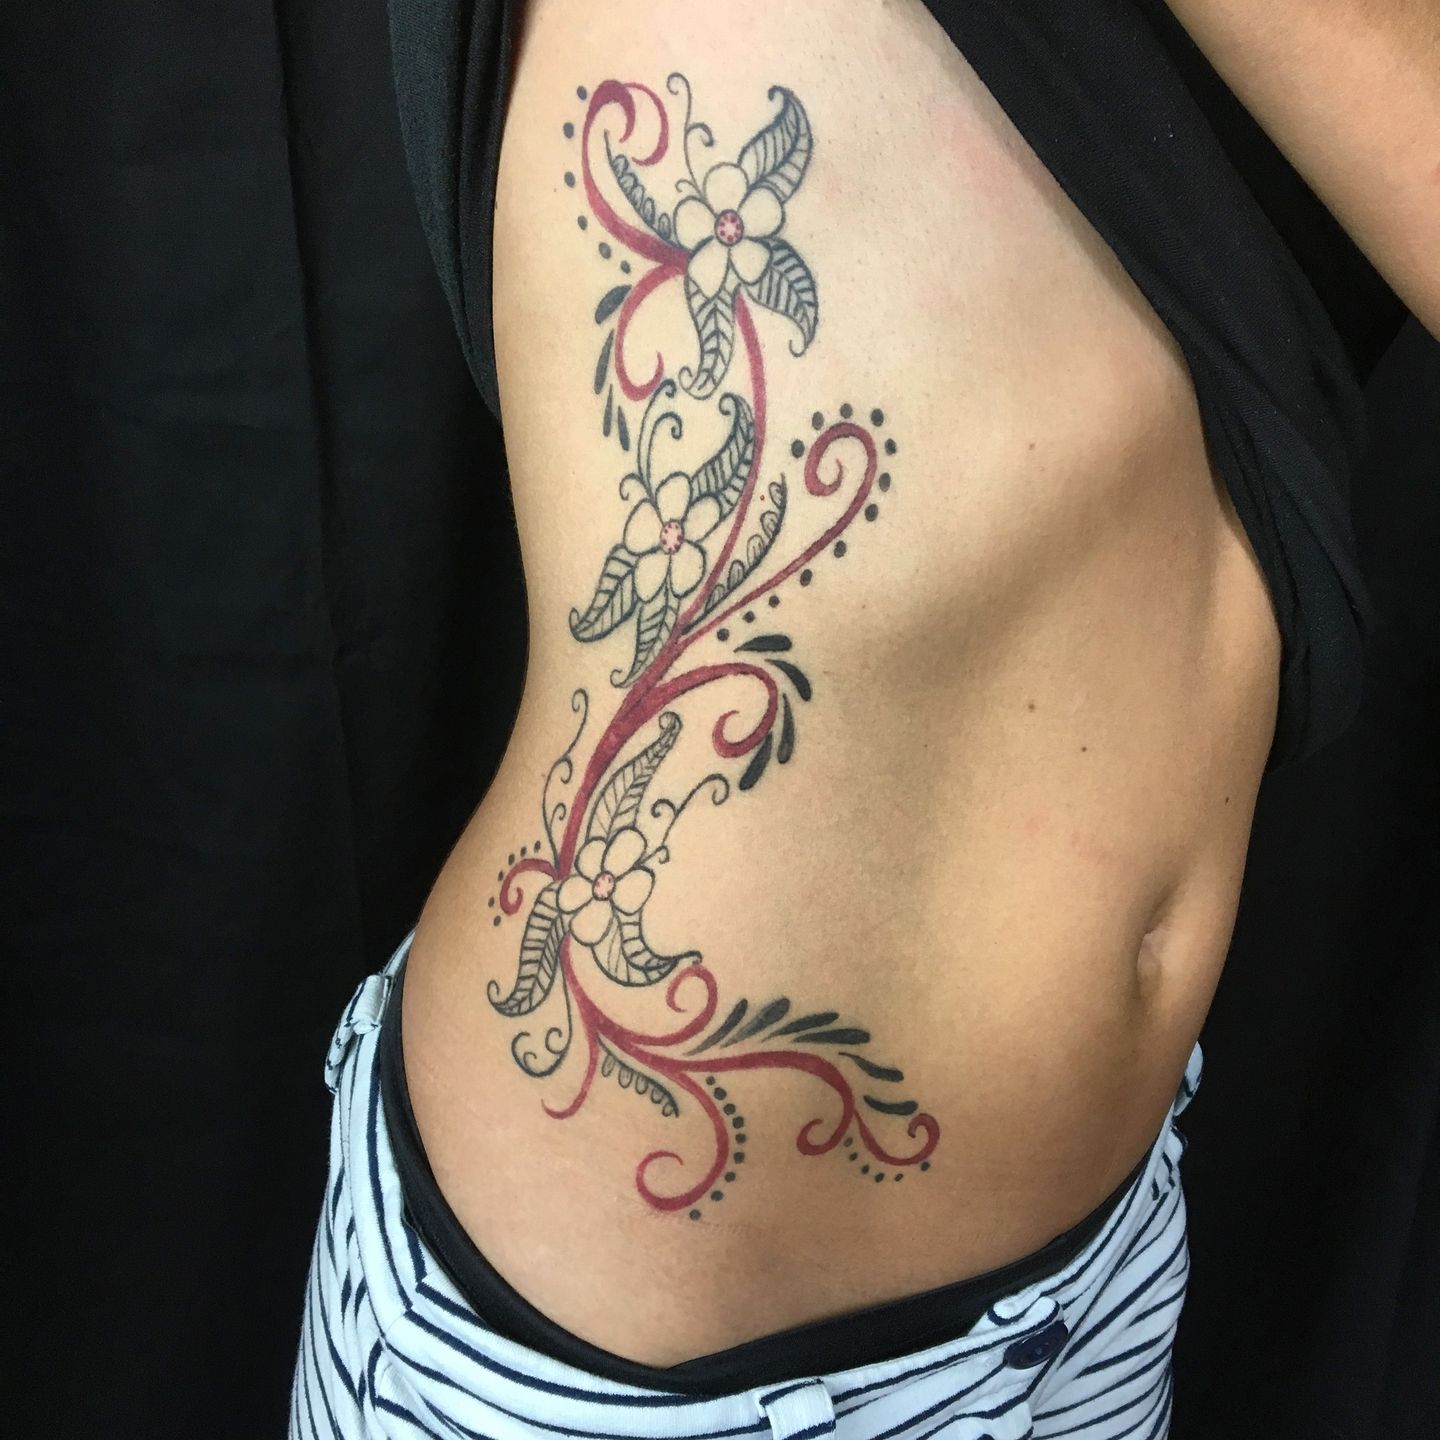 Tattoo uploaded by Ryan 'The Scientist' Smith • Full side piece from 2016!  #thescientist #travellingtattooist #ornamentaltattoo #jeweltattoo  #gemtattoo #rose #jewel #ornamental #ornate #blackwork #dotwork #realism  #hennism #floraltattoo #tattoodo ...